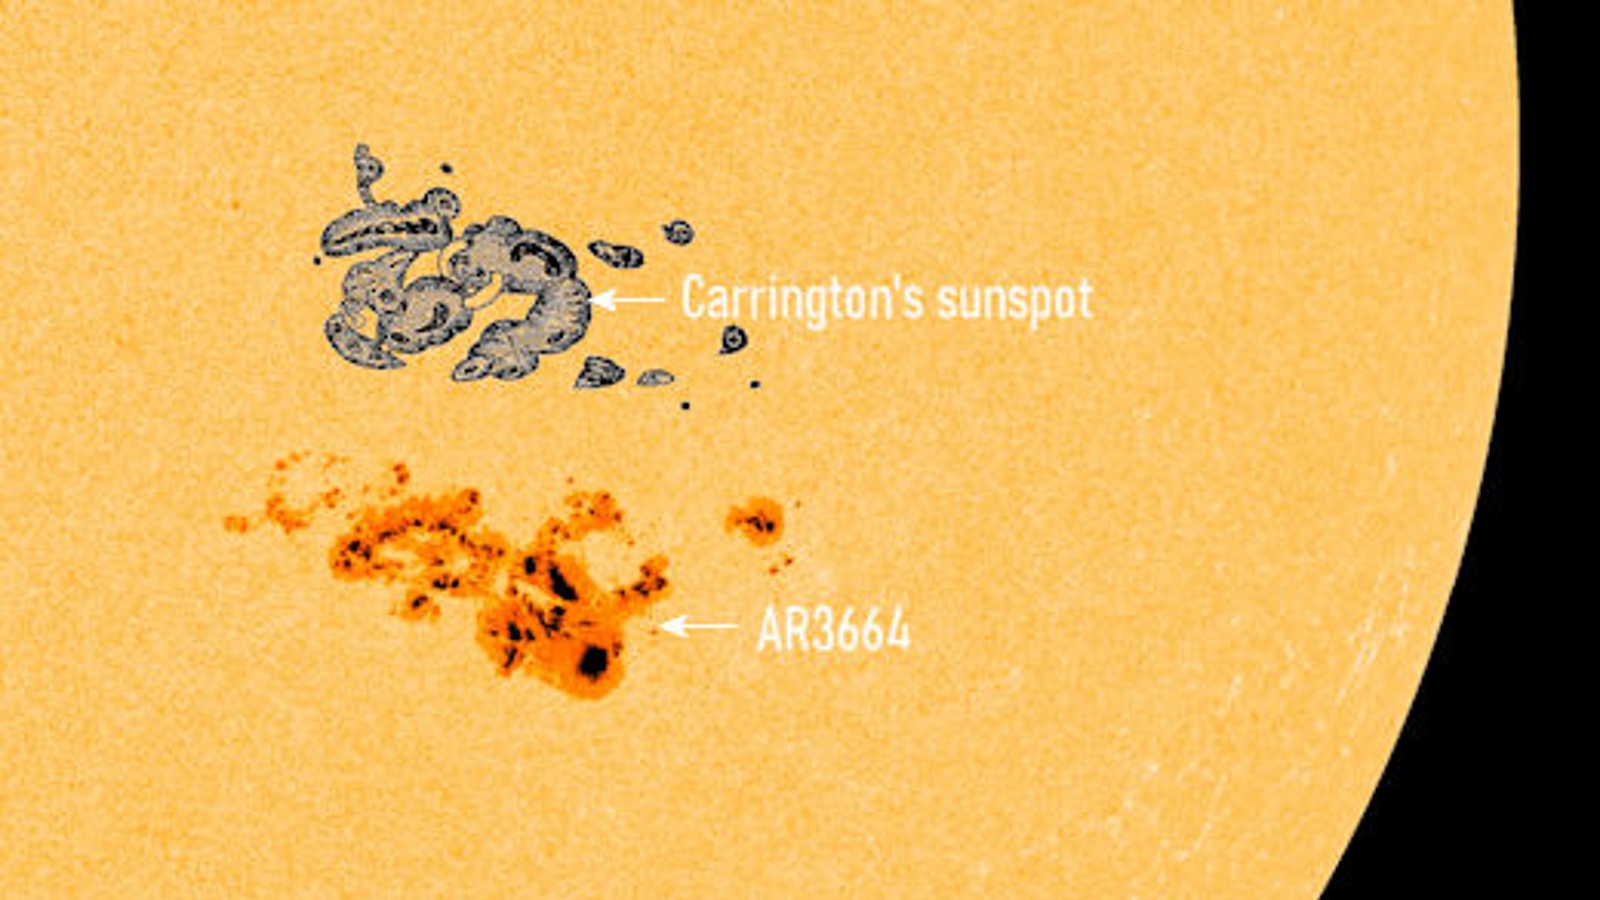 A size compariosn between AR3664 and the Carrington sunspot